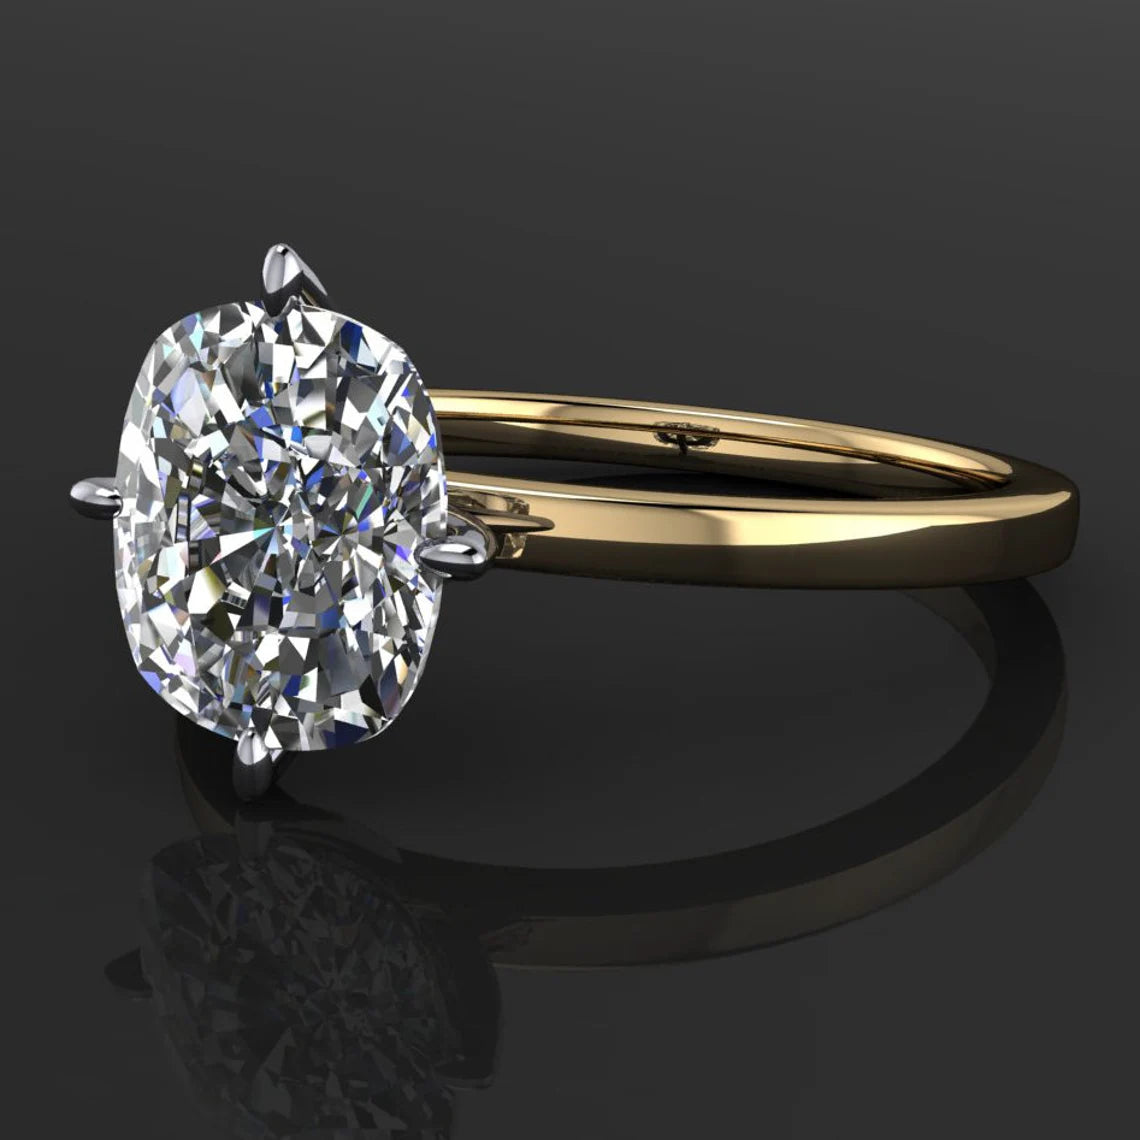 katerina ring - 2 carat elongated cushion ZAYA moissanite engagement ring - J Hollywood Designs